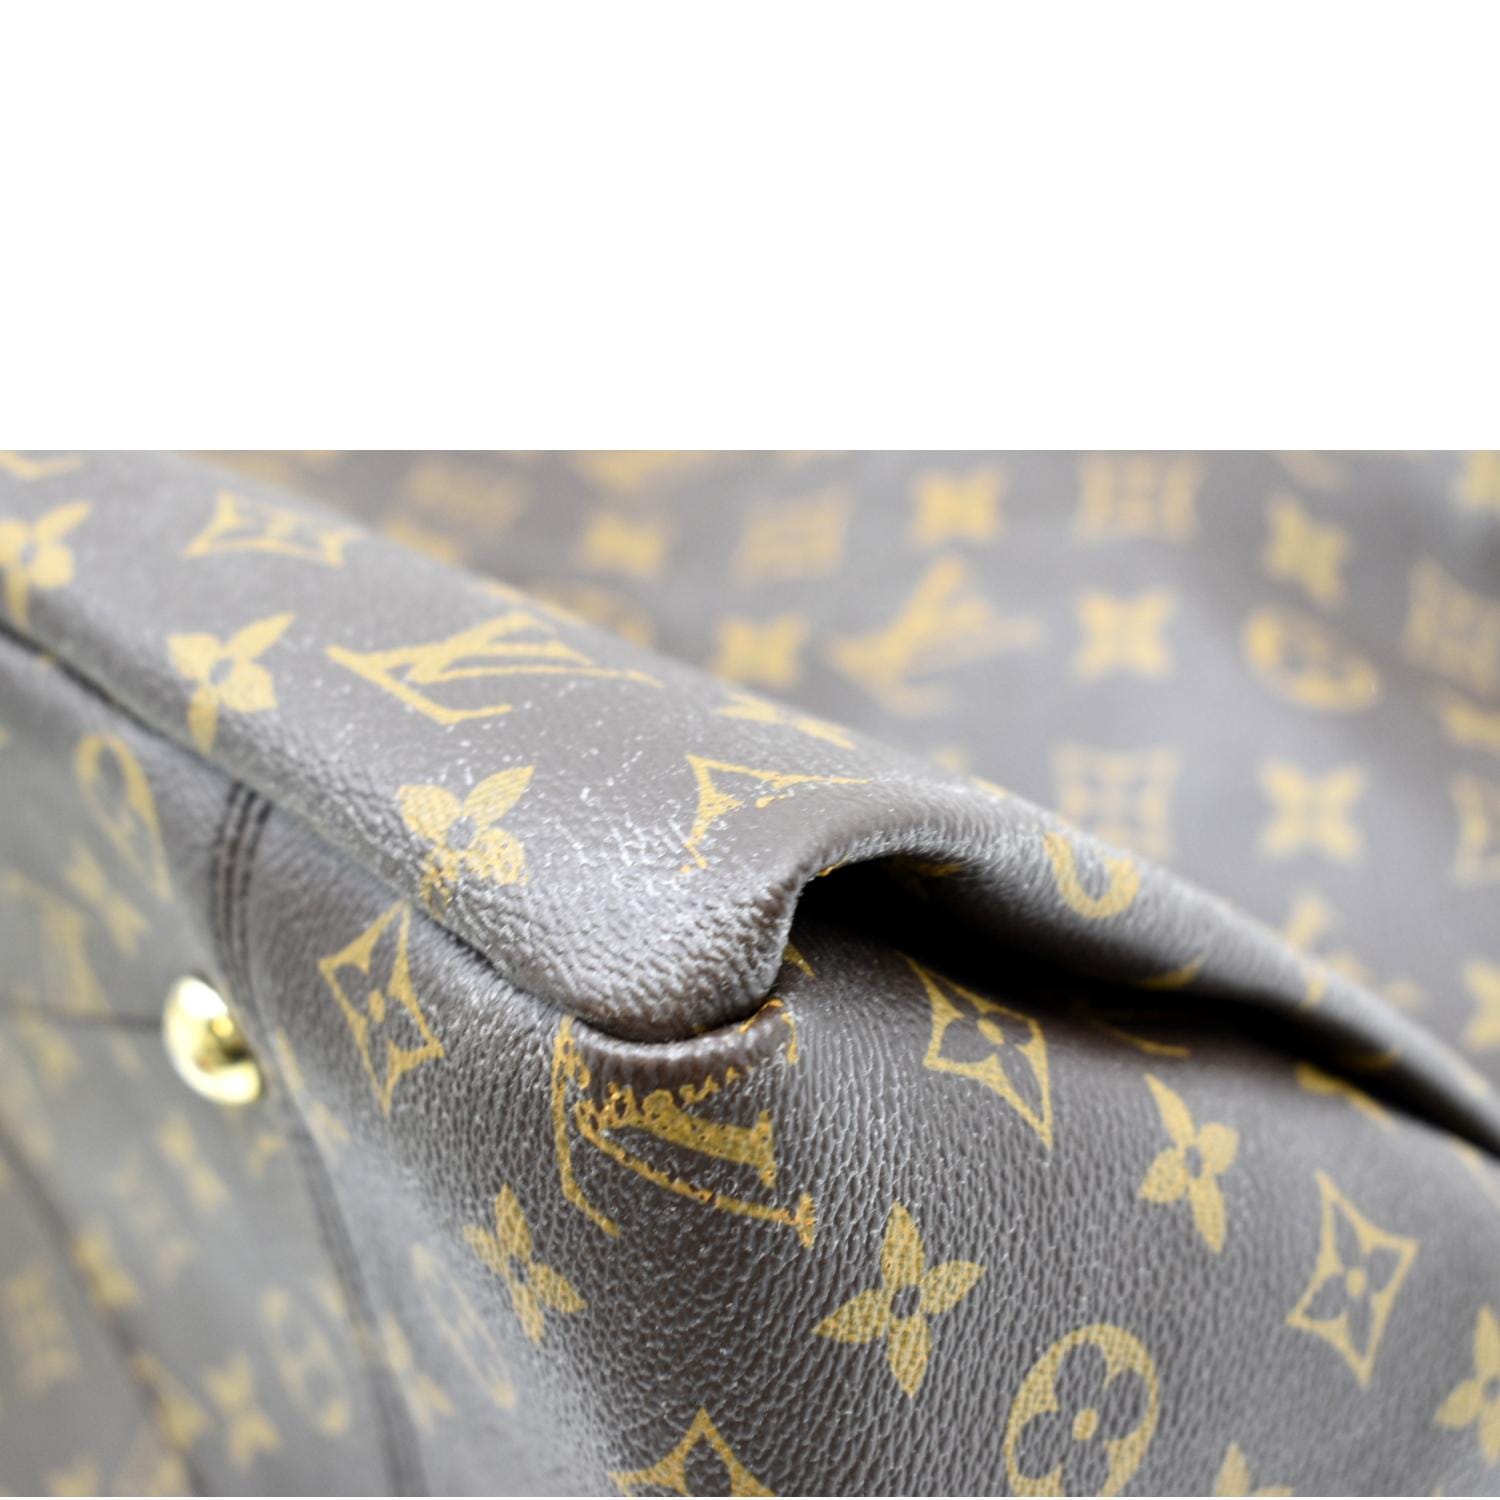 Louis Vuitton Monogram Artsy MM Hobo Bag 66lk322s For Sale at 1stDibs